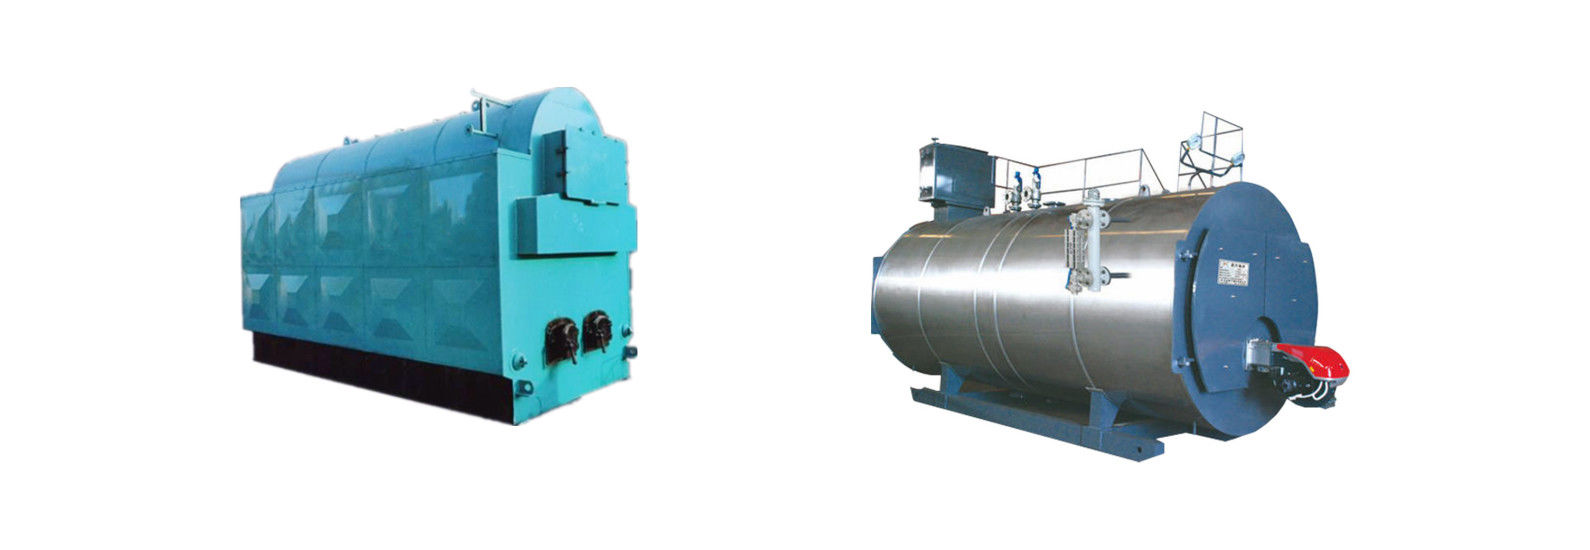 kualitas Minyak fired Steam Boiler pabrik